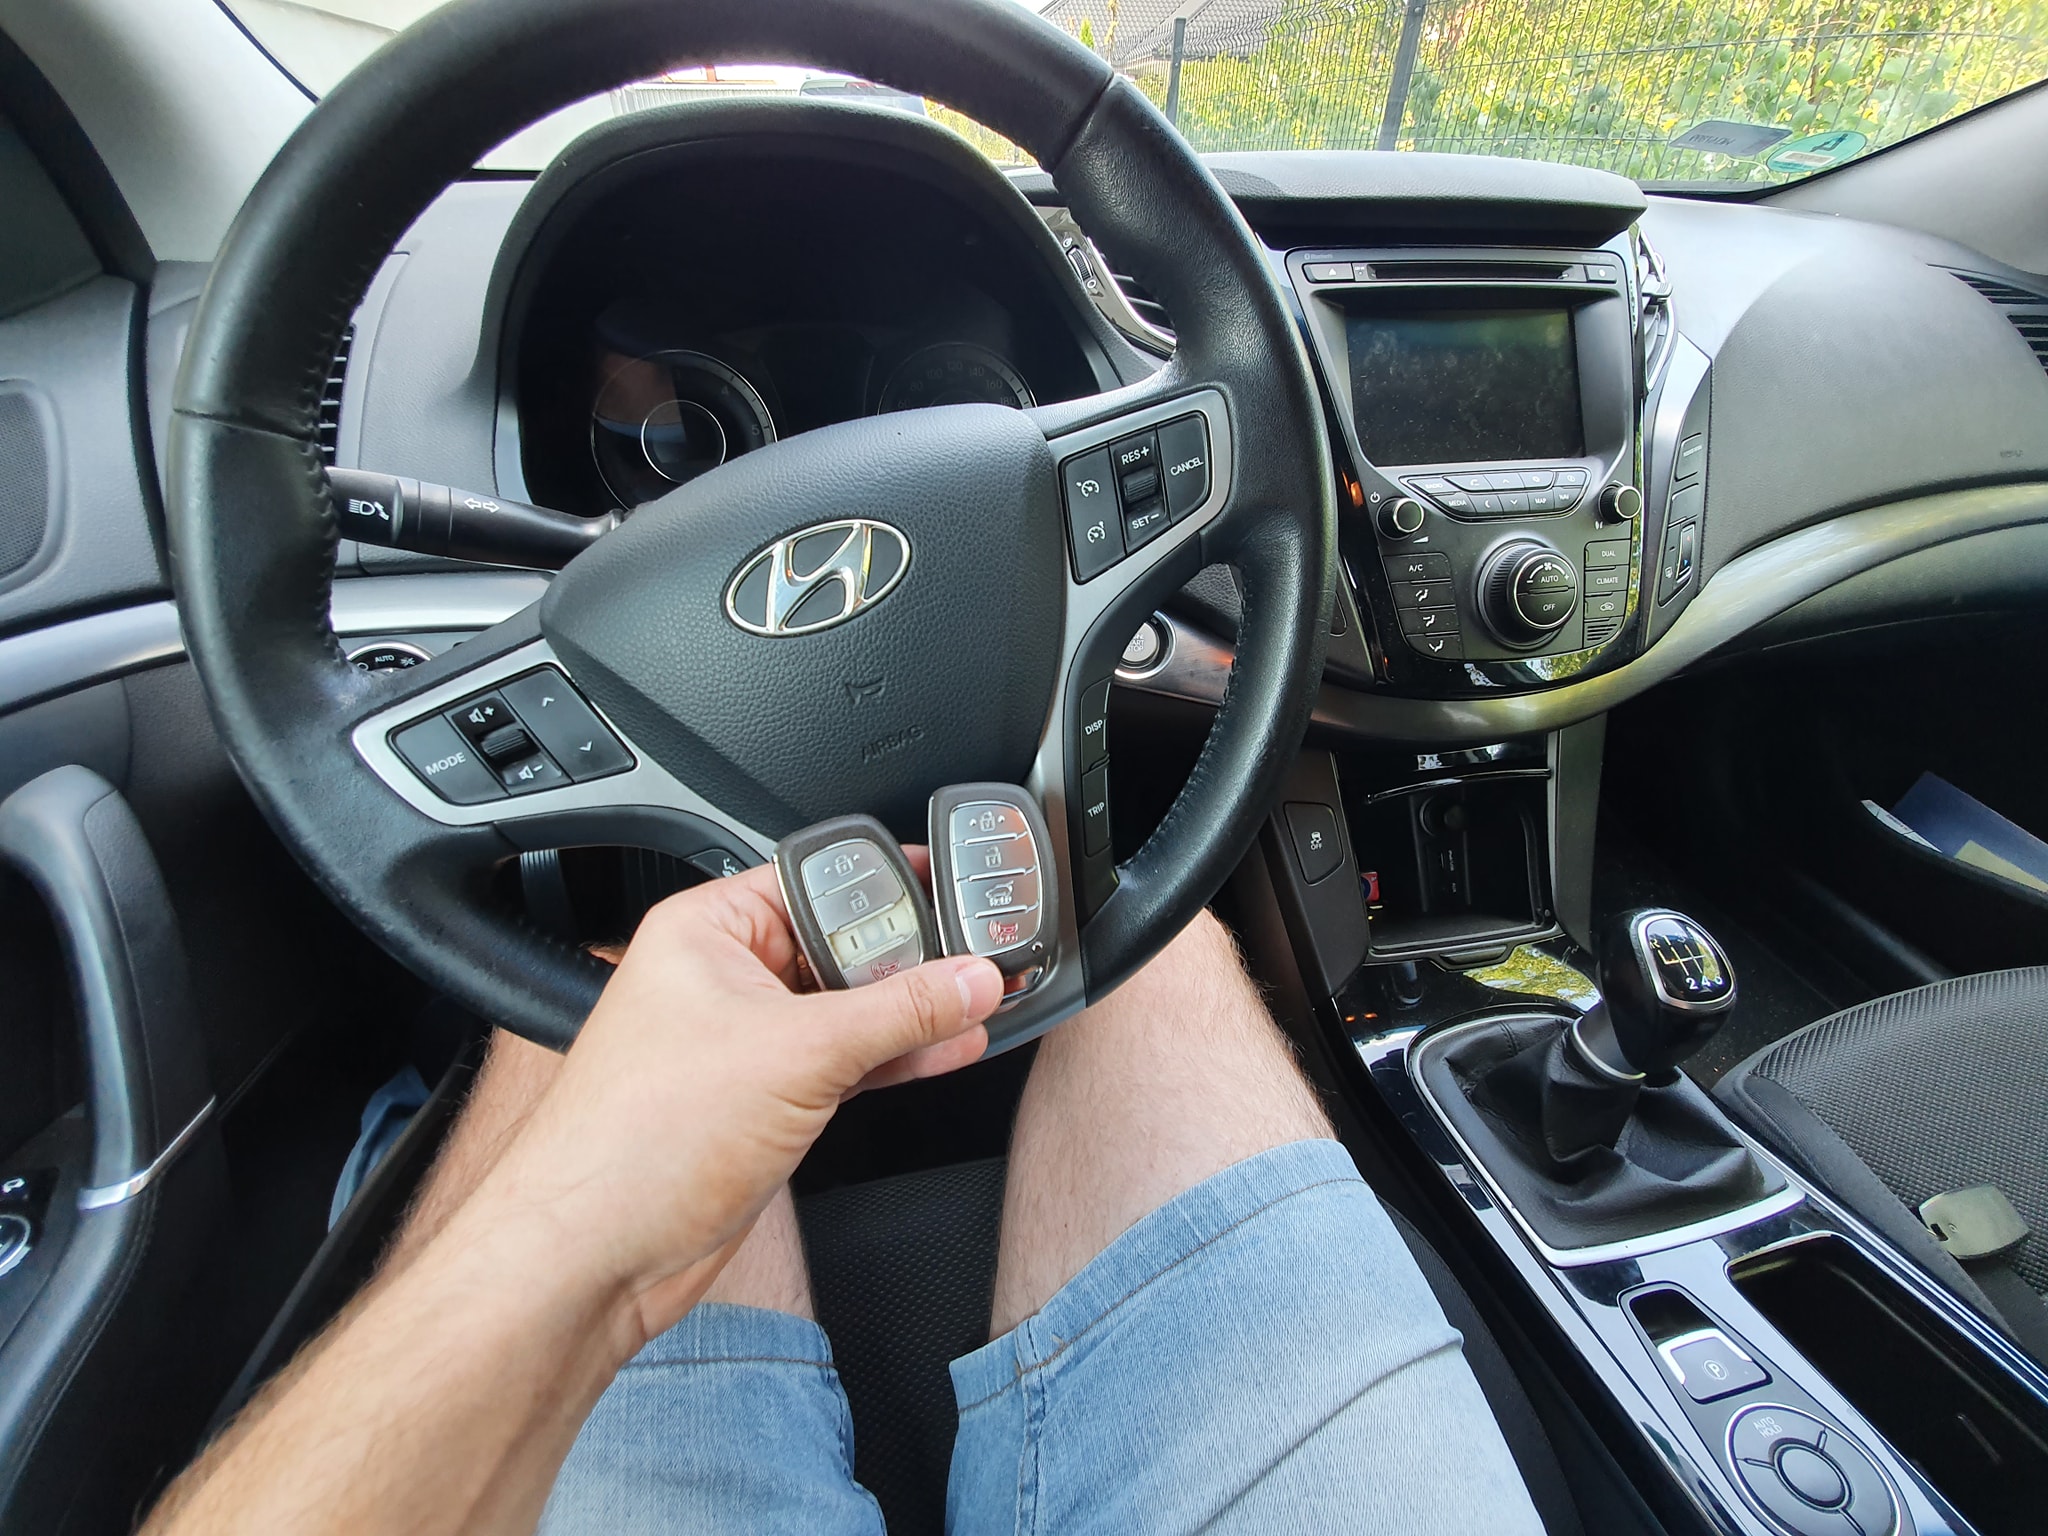 Hyundai i40 2011 dorobienie klucza keyless go